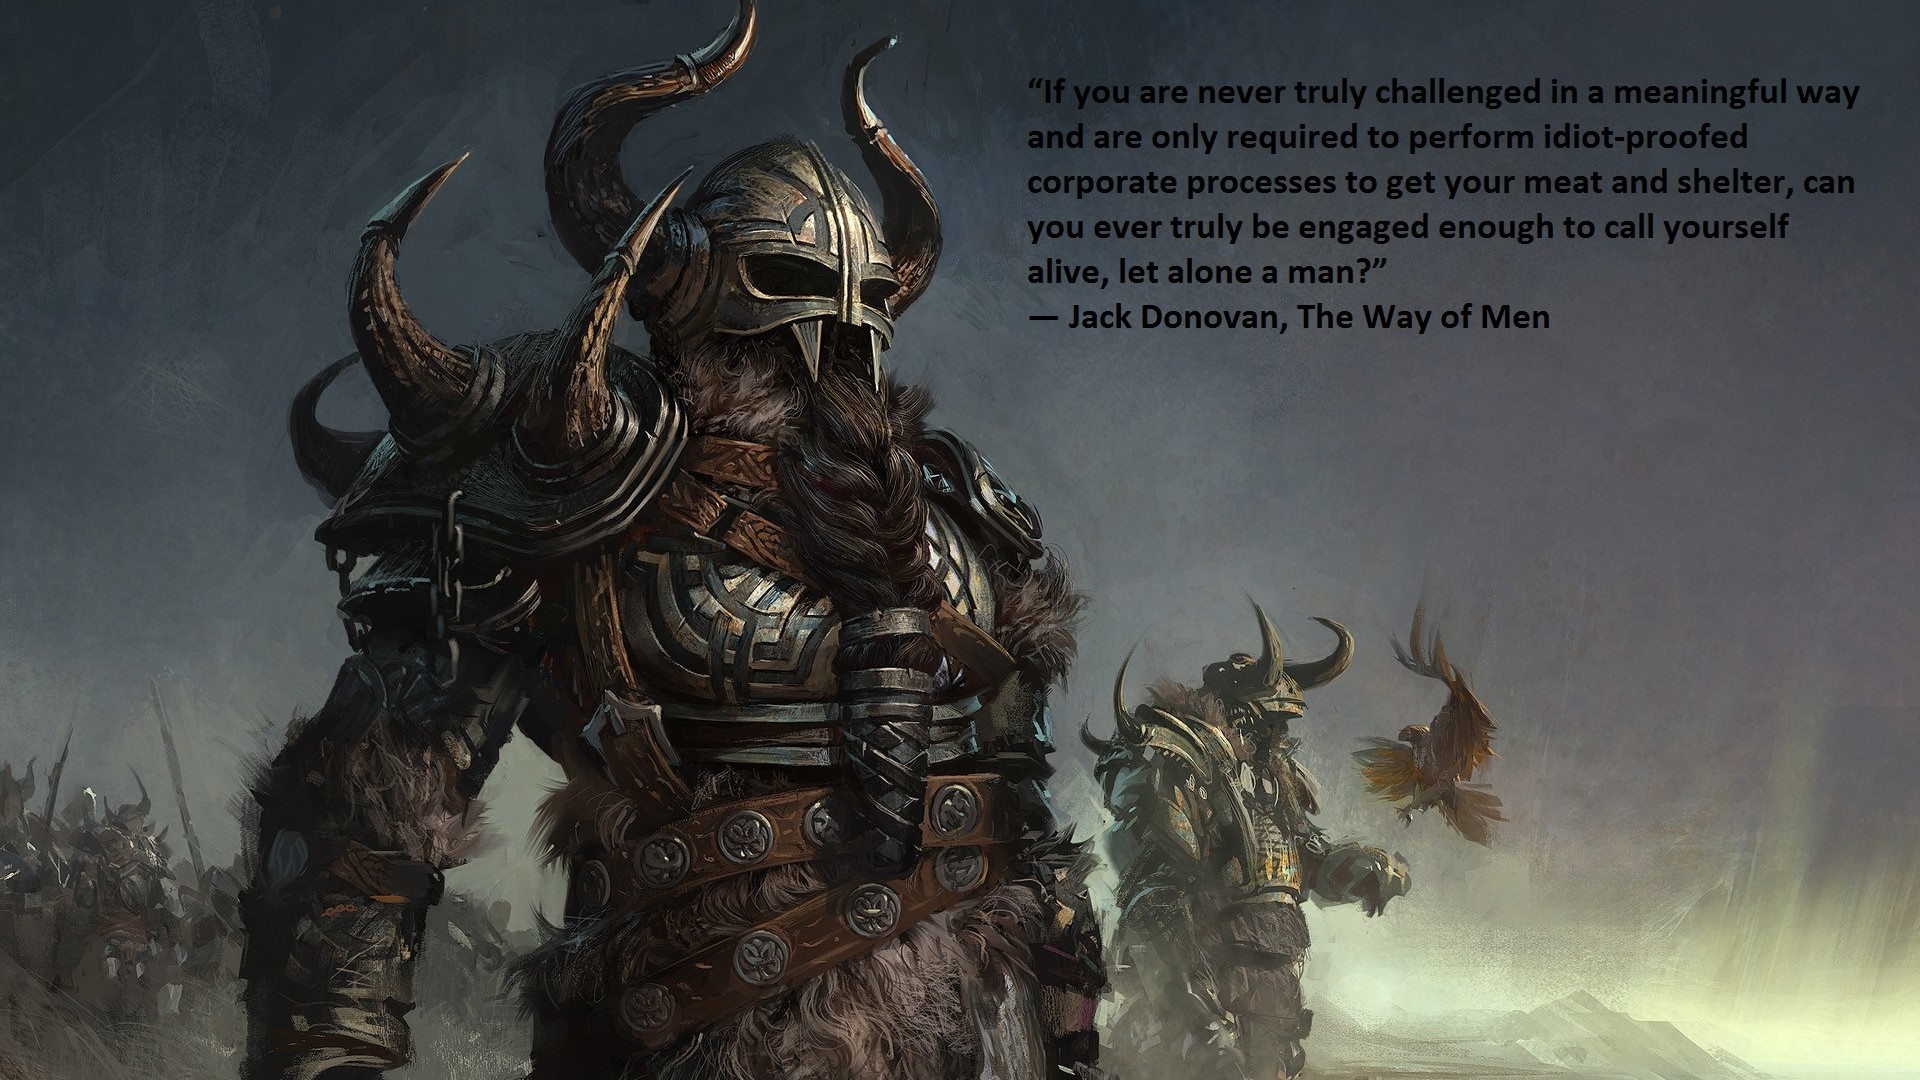 General 1920x1080 Jack Donovan barbarian quote